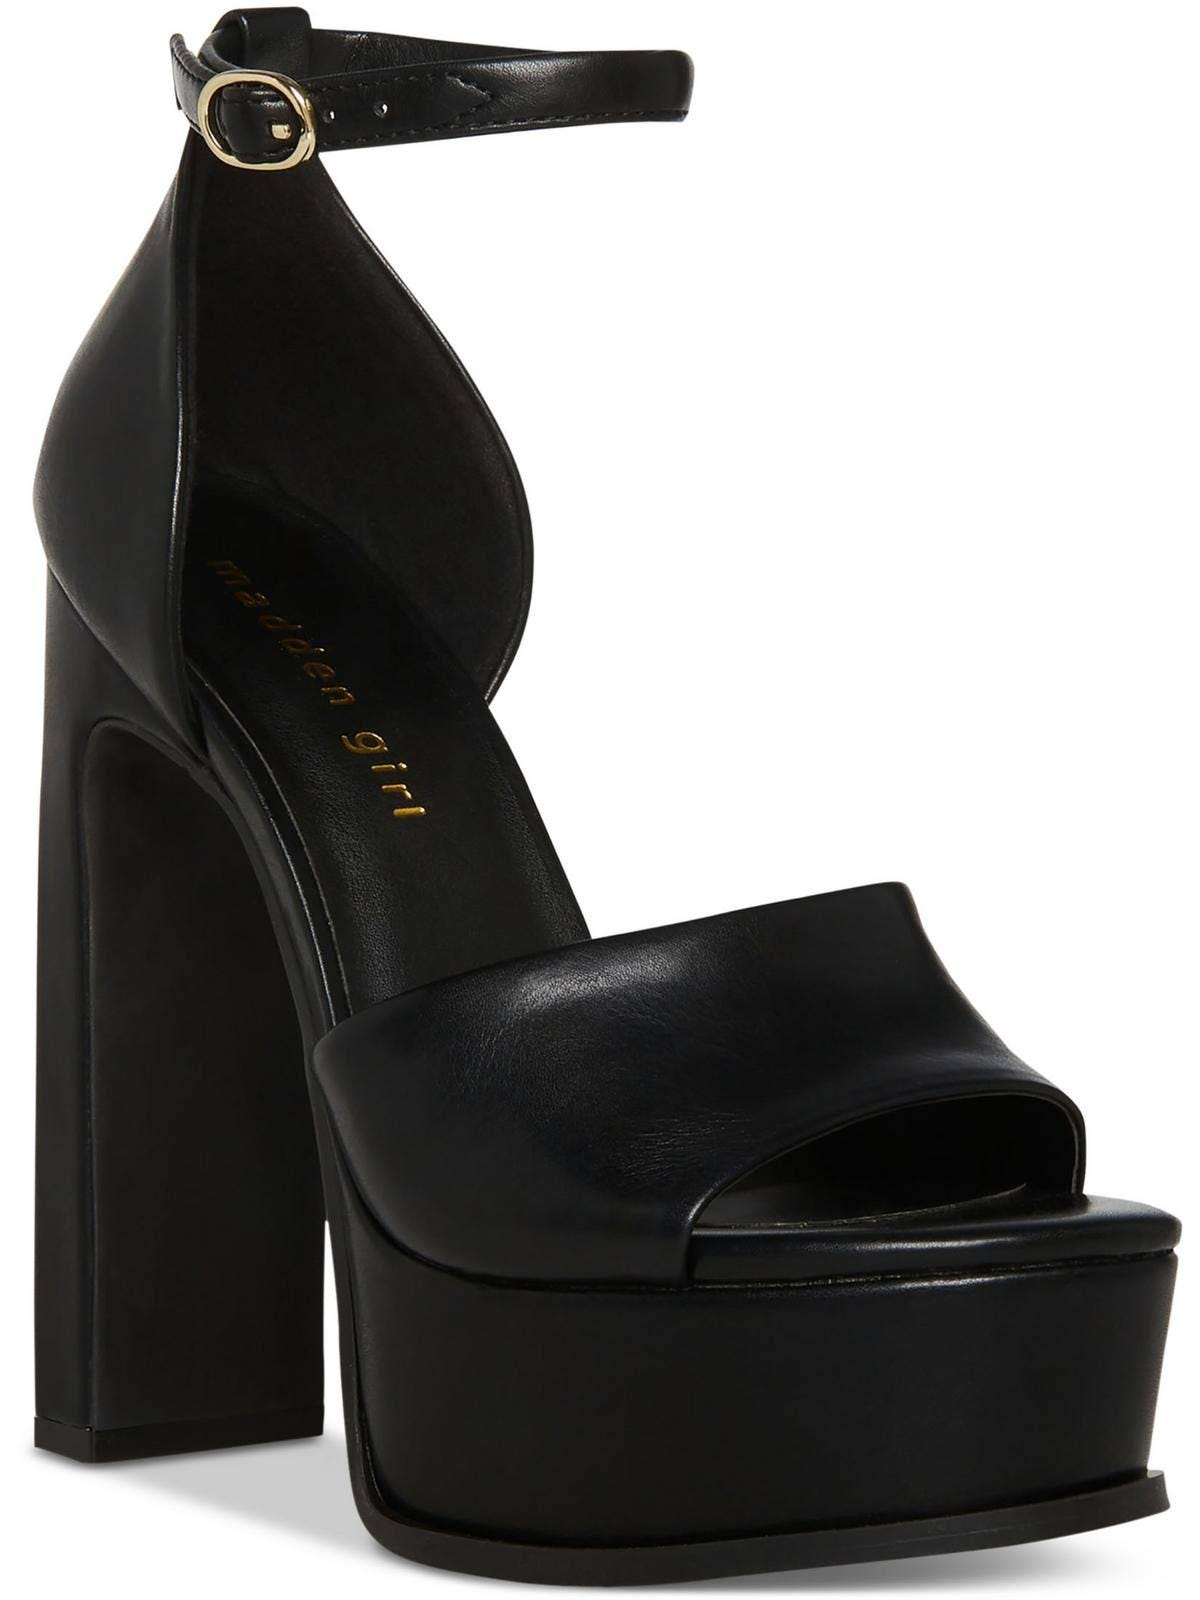 Elevated Bold Fashion - Bobbi + Bricka's Black Thick Heel | Image